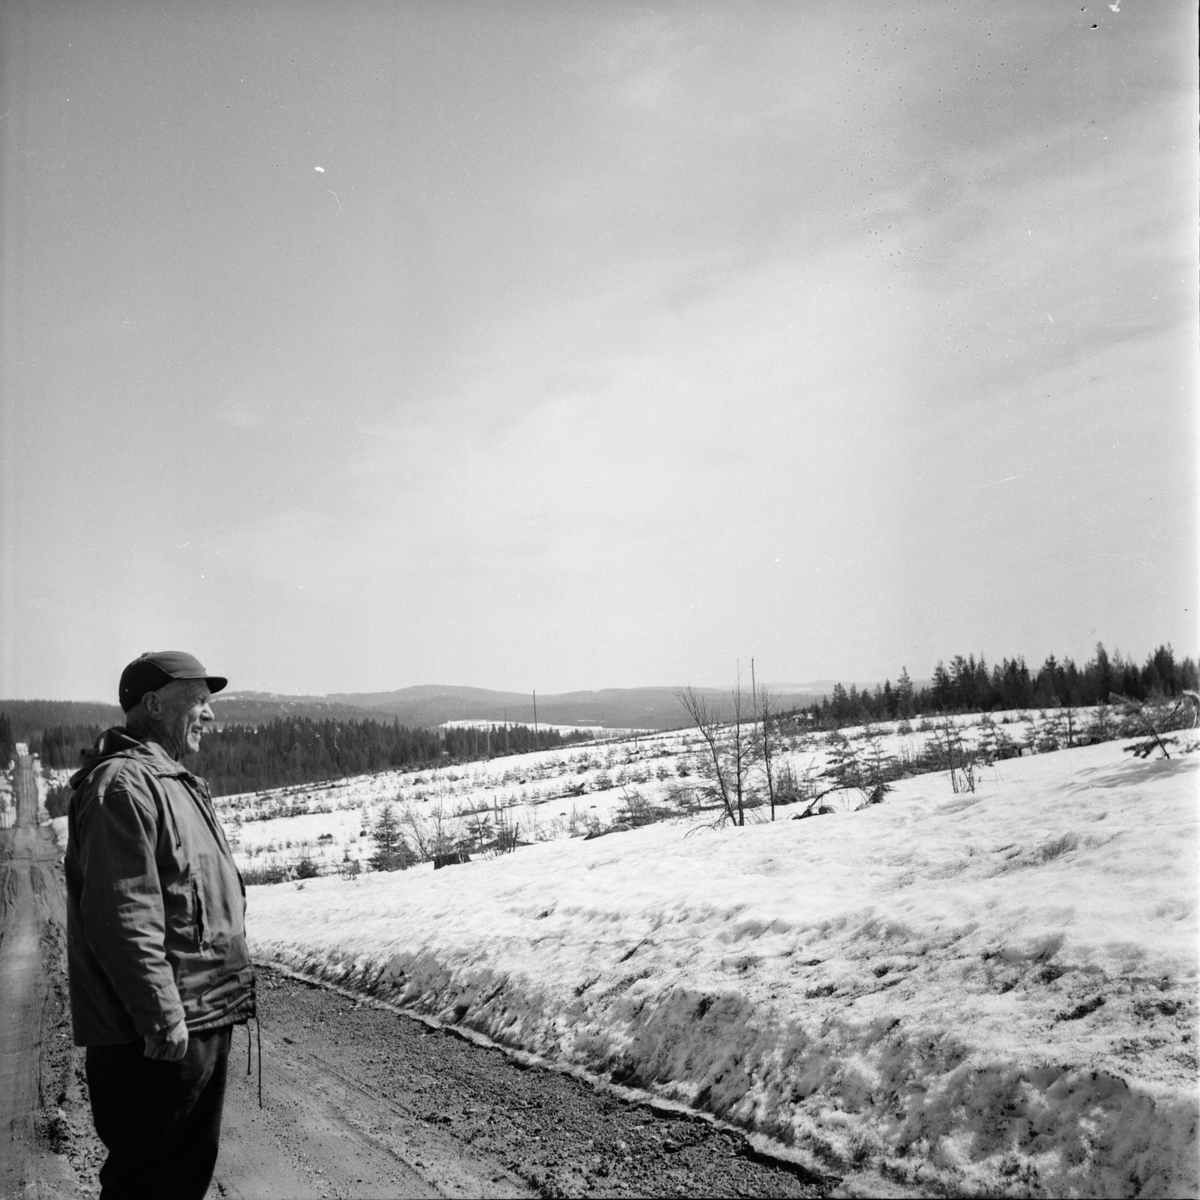 Sjösveden. Rimbo-Erik.
3/5-1966